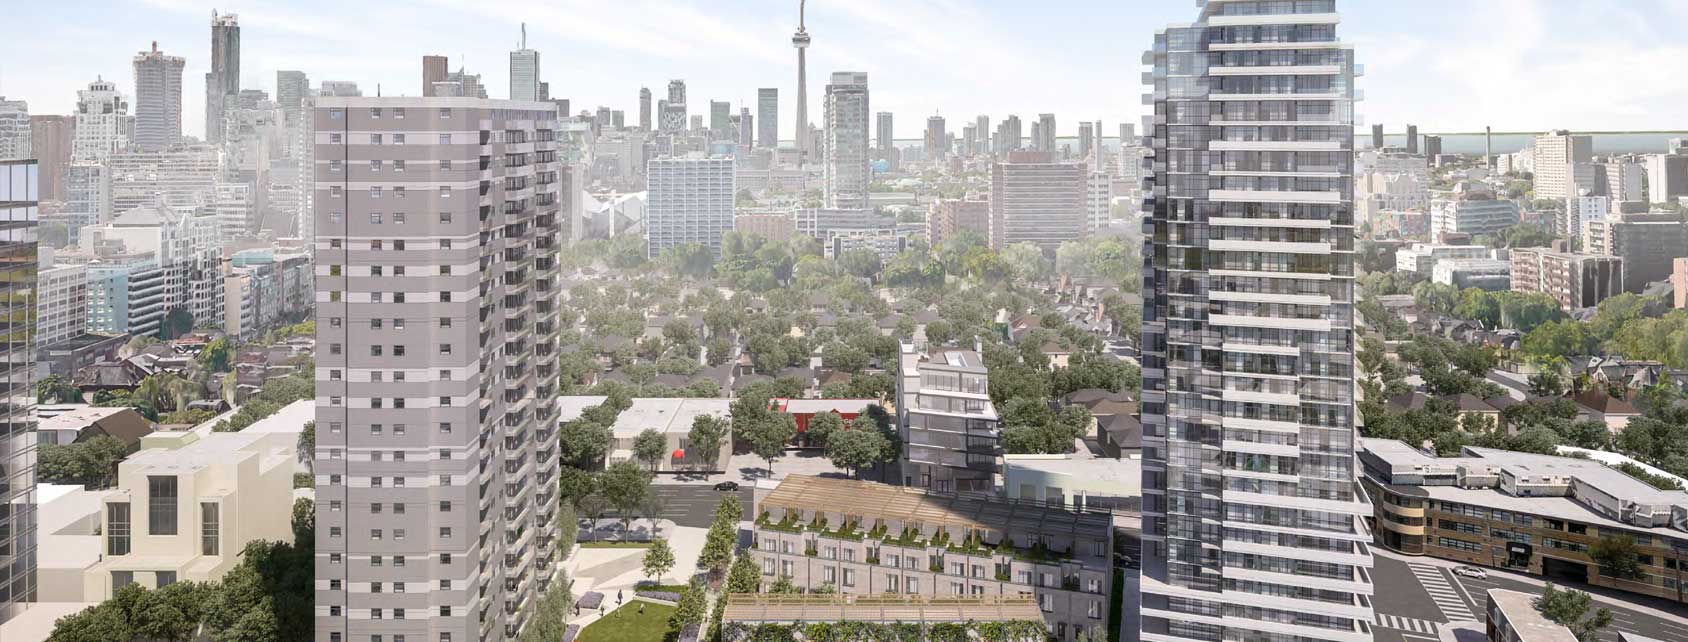 AYC Condos Tower View Toronto, Canada